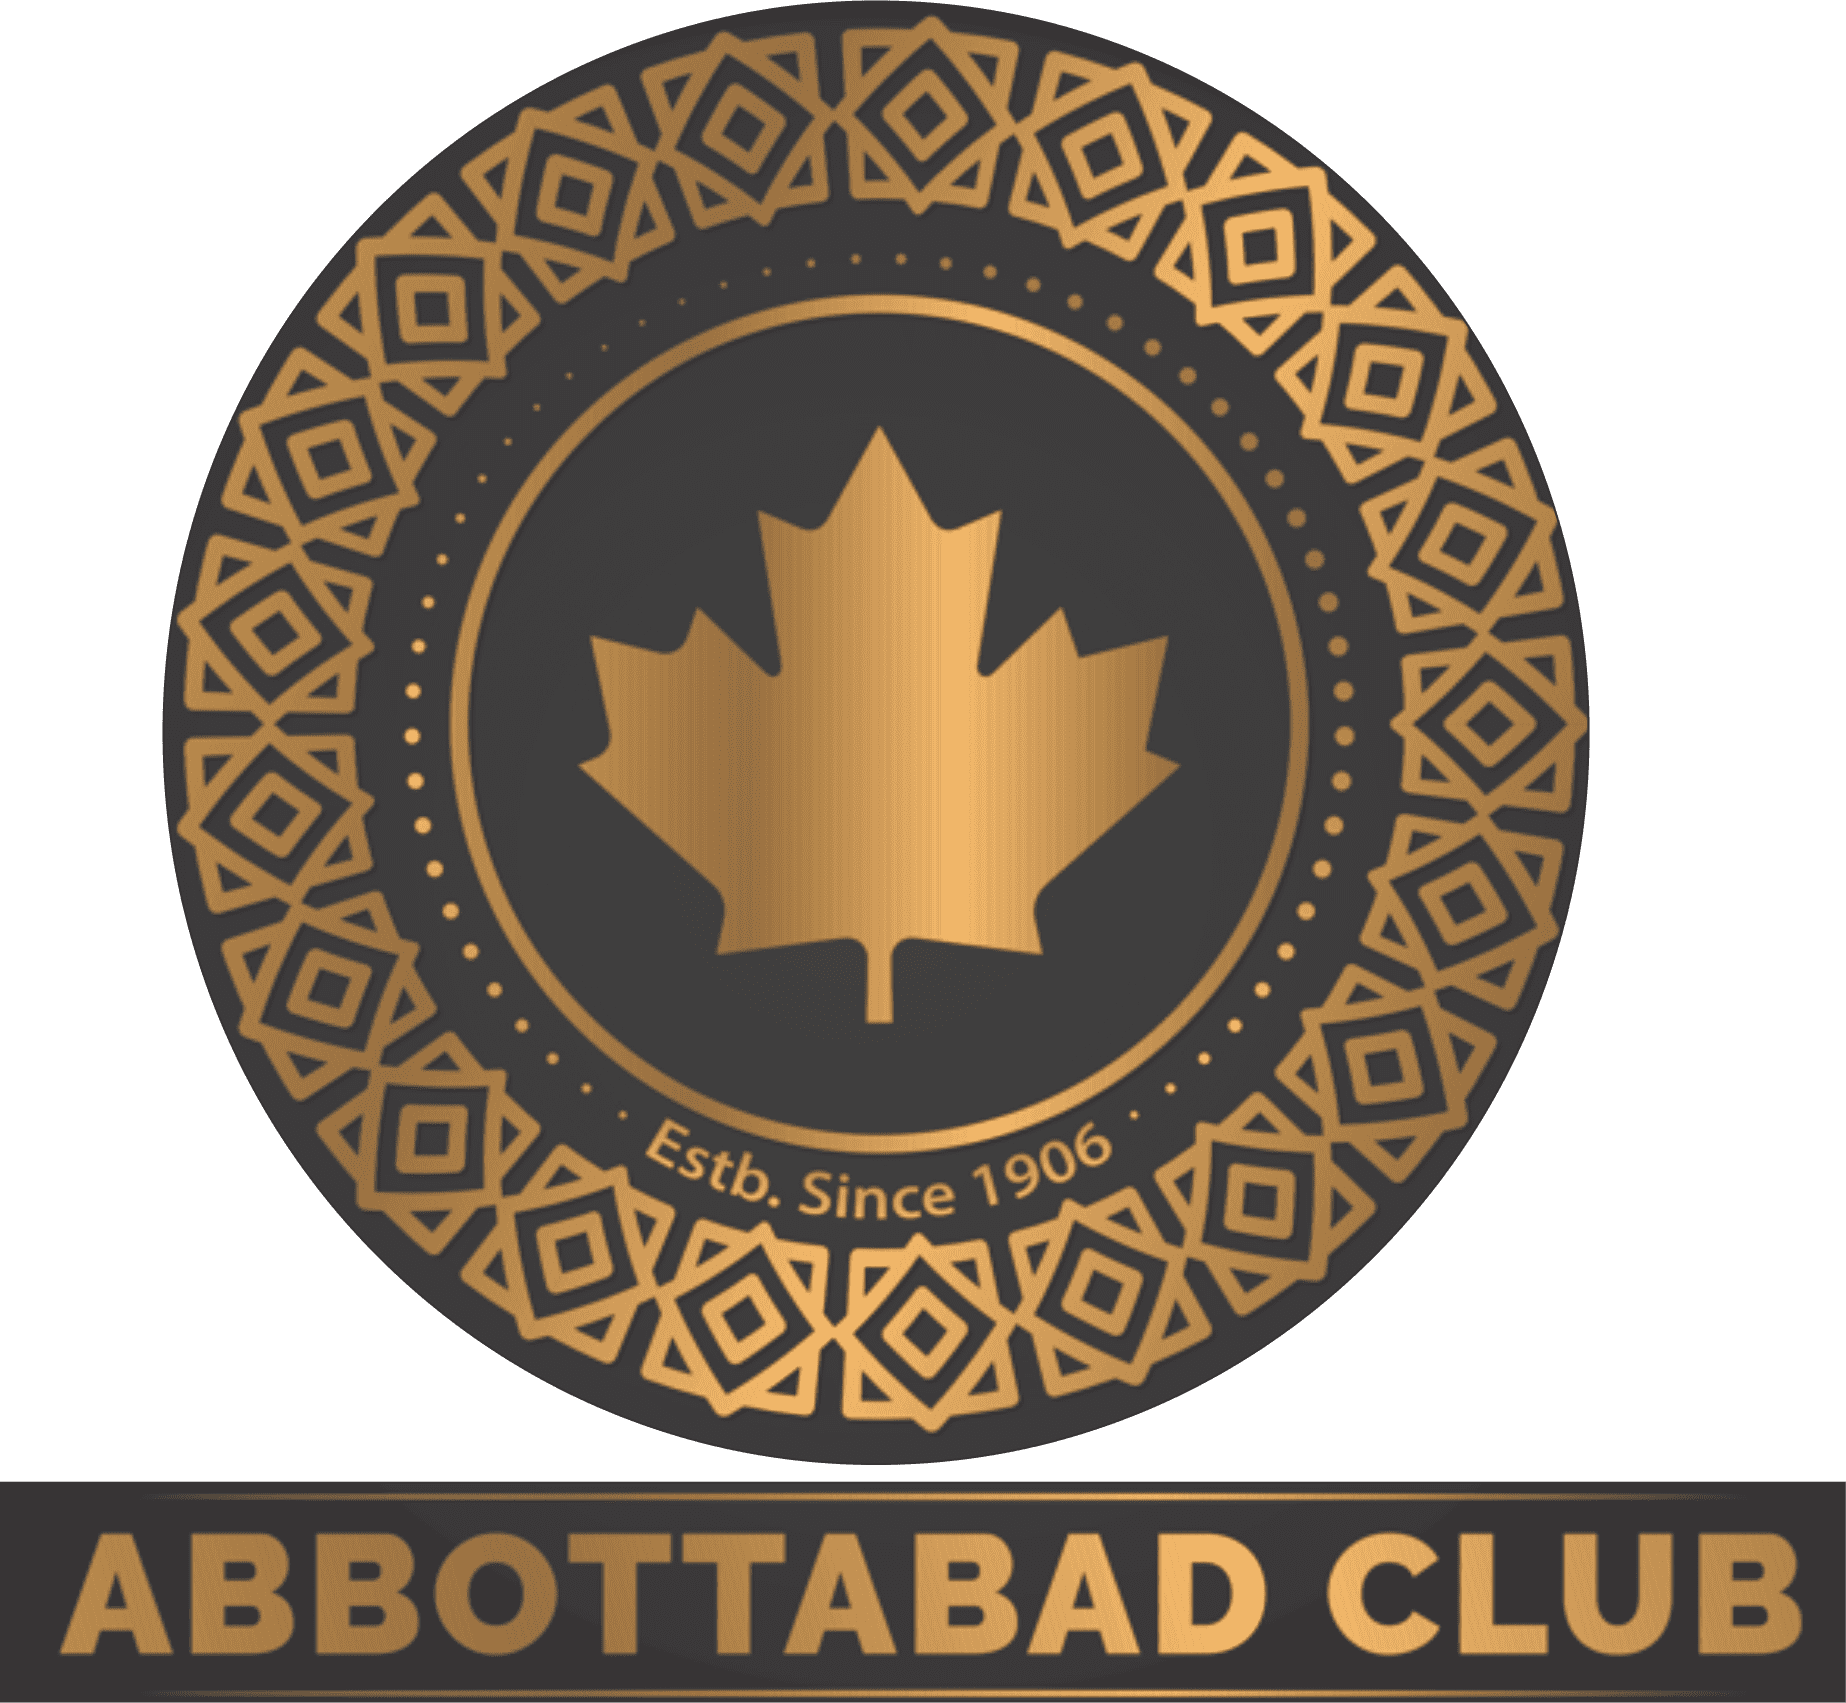 The Abbottabad Club